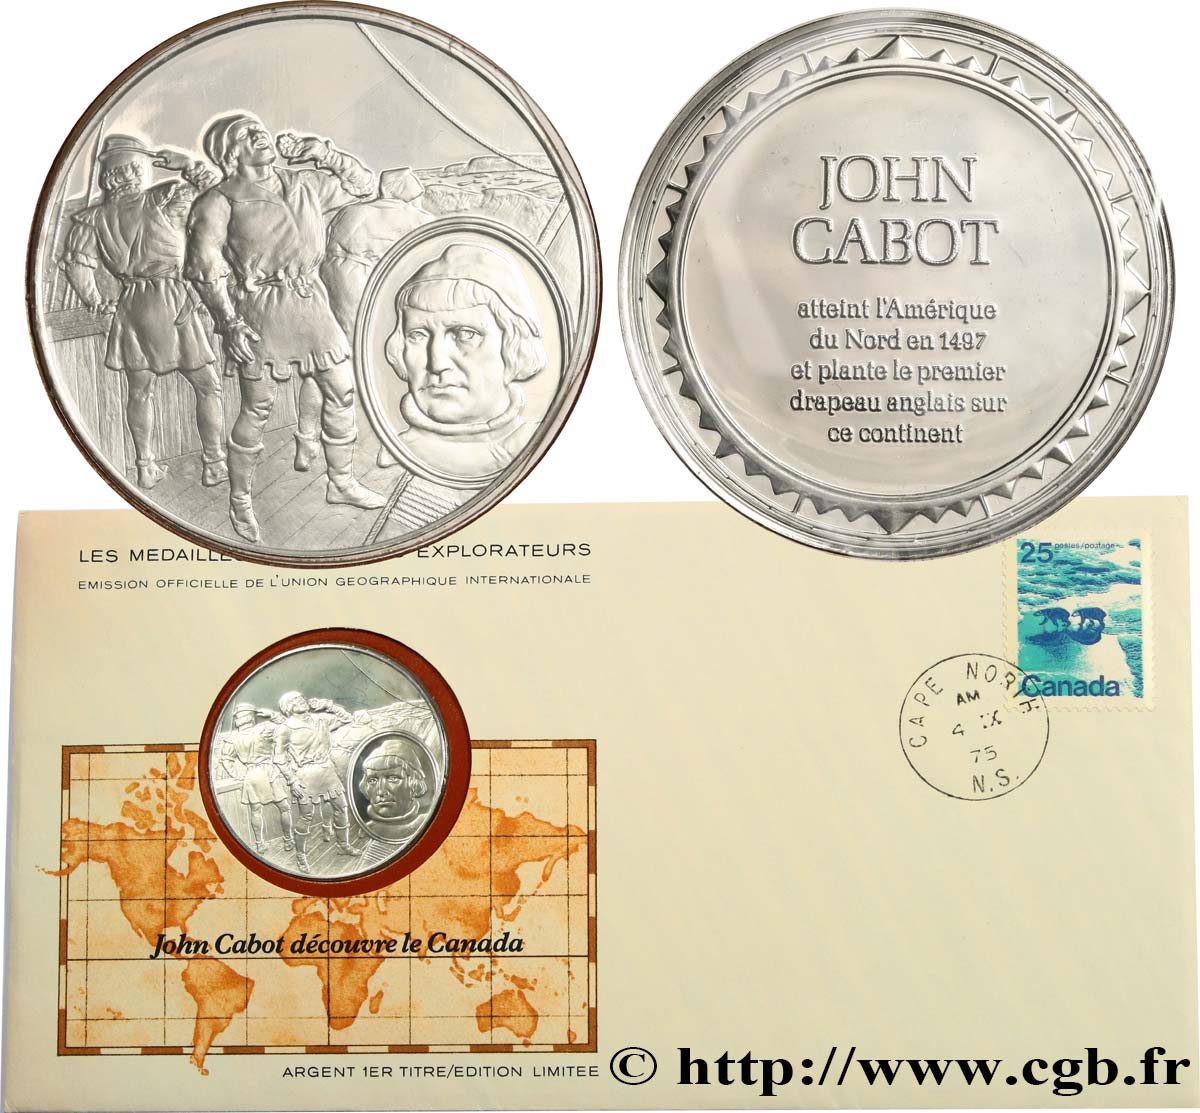 THE GREAT EXPLORERS  MEDALS Enveloppe “Timbre médaille”, John Cabot découvre le Canada MS